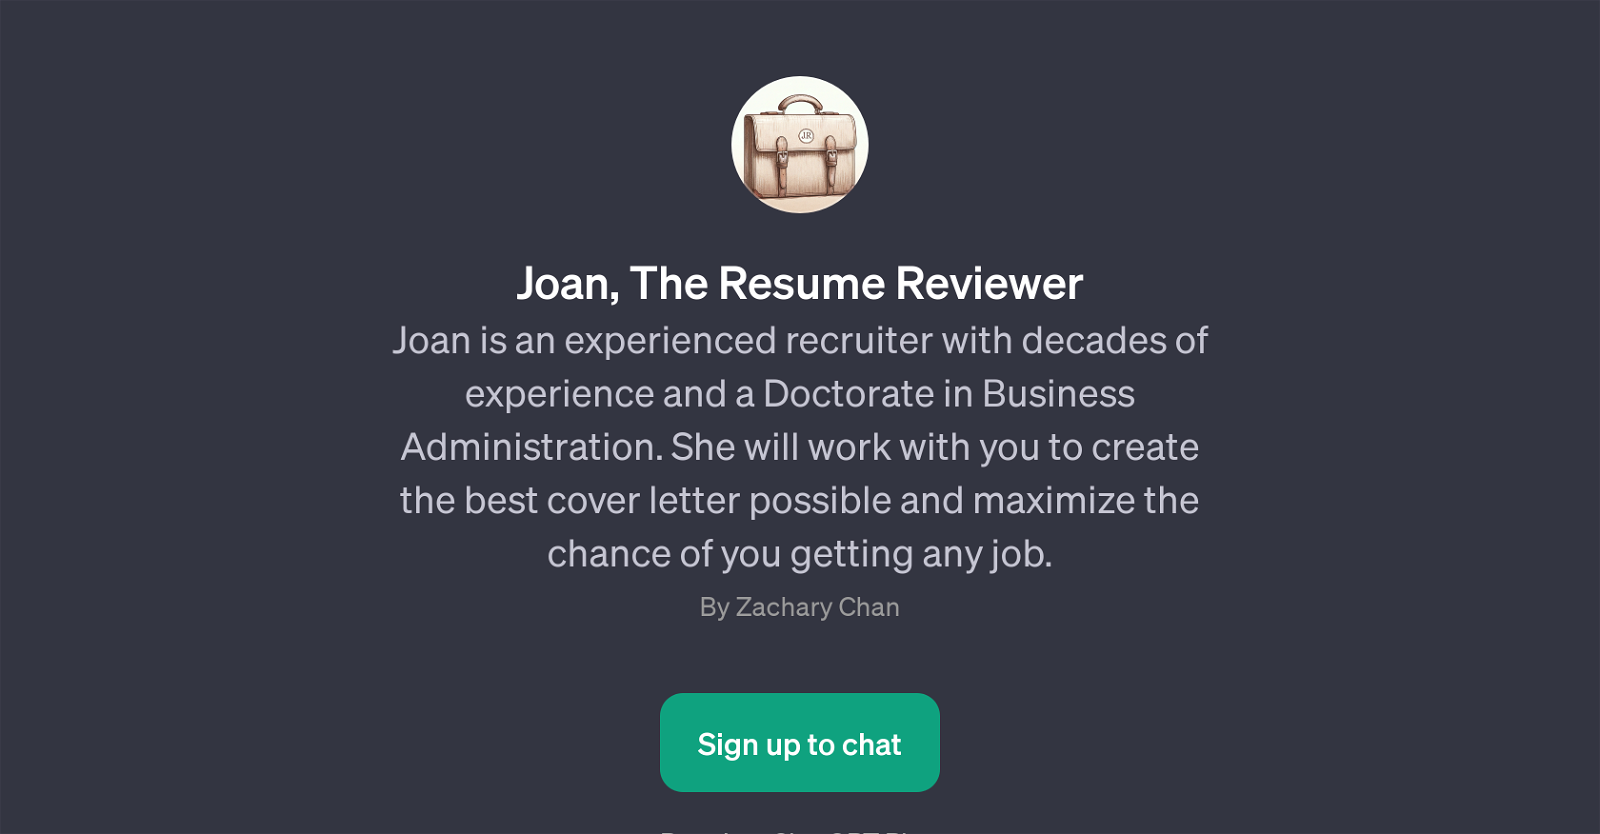 Joan, The Resume Reviewer website